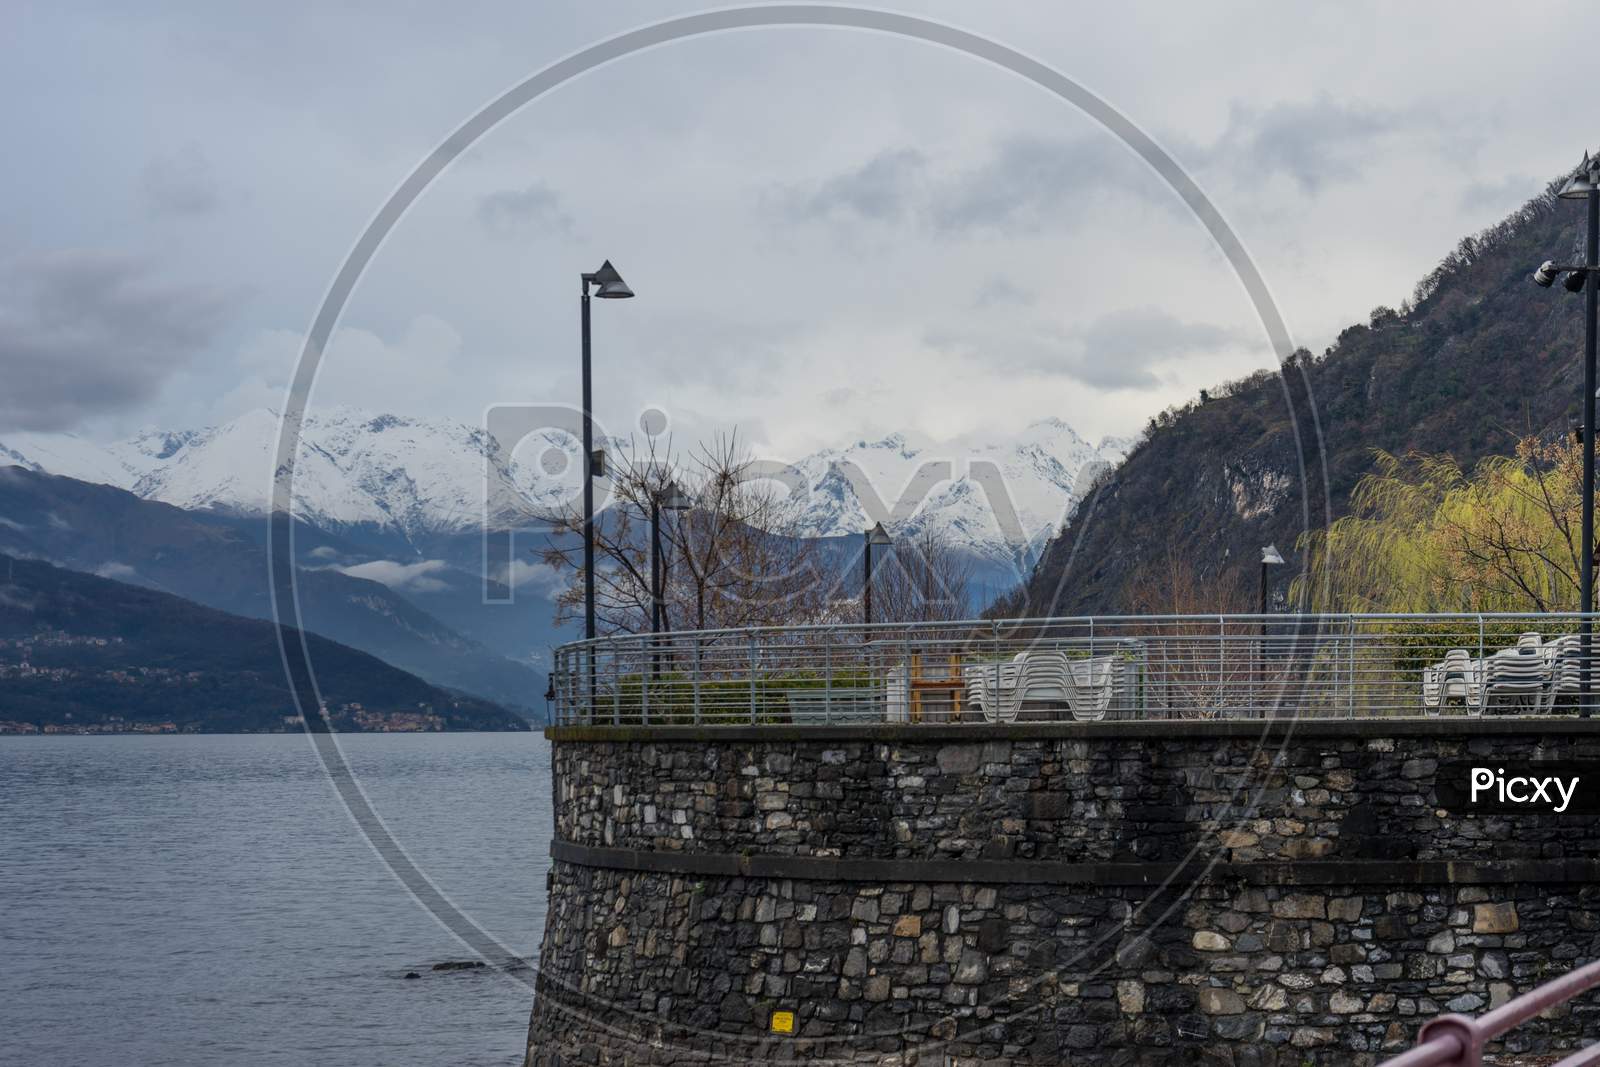 Italy, Varenna, Lake Como, A Bridge Over A Body Of Water With A Snowcap Mountain In The Background